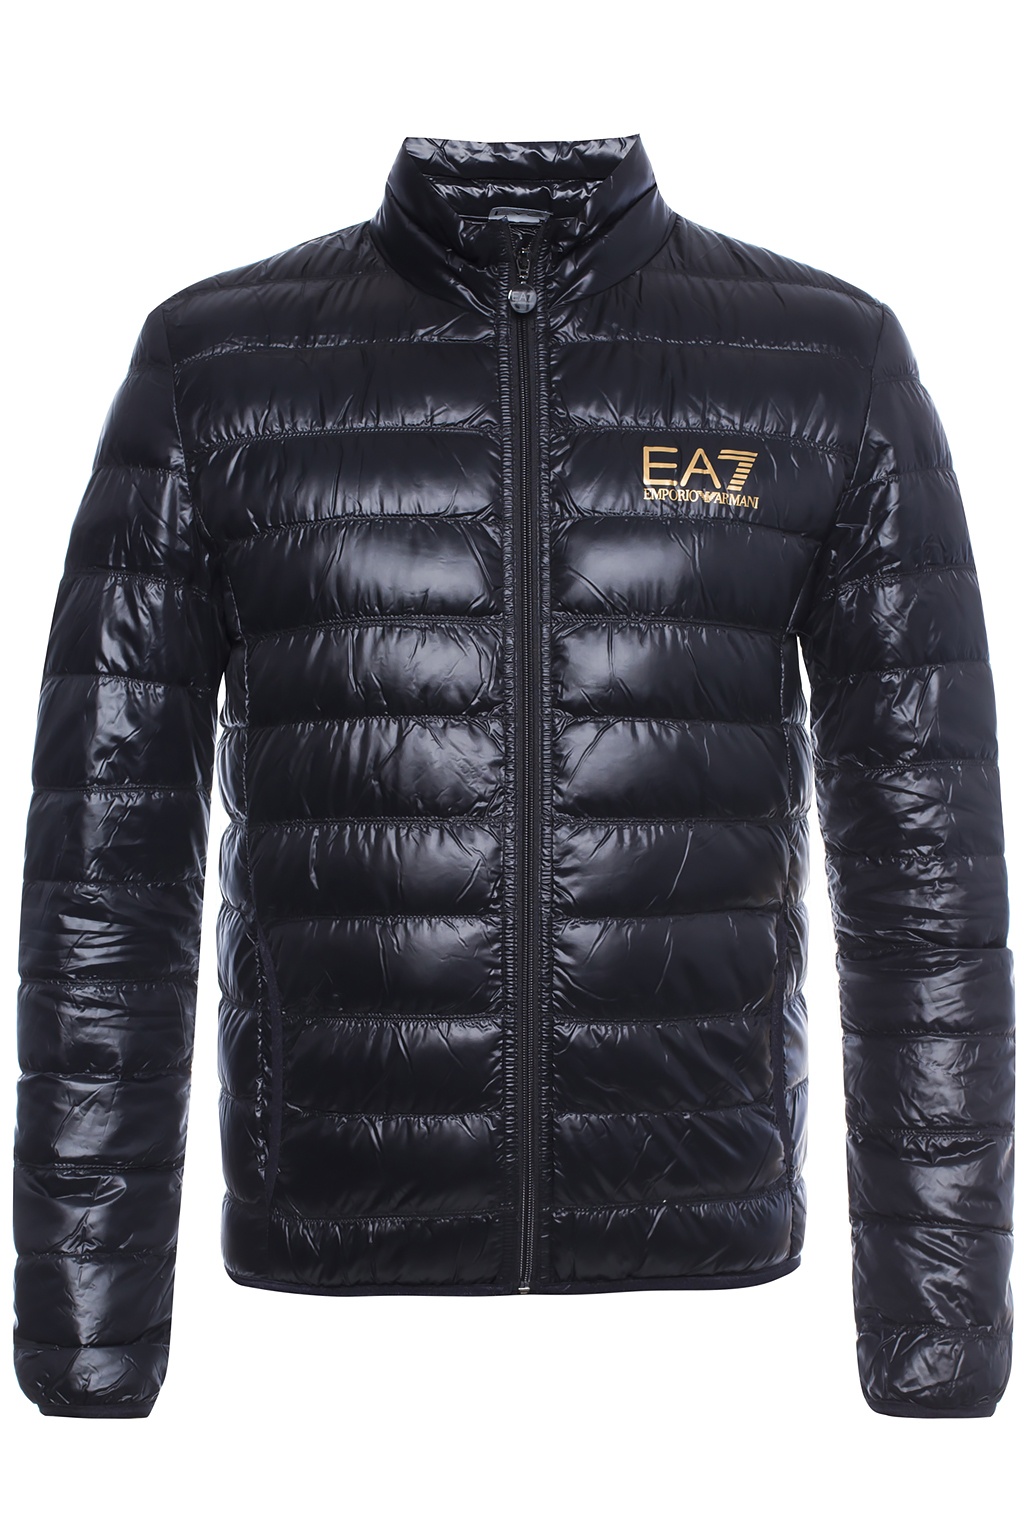 Down jacket EA7 Emporio Armani - Vitkac 